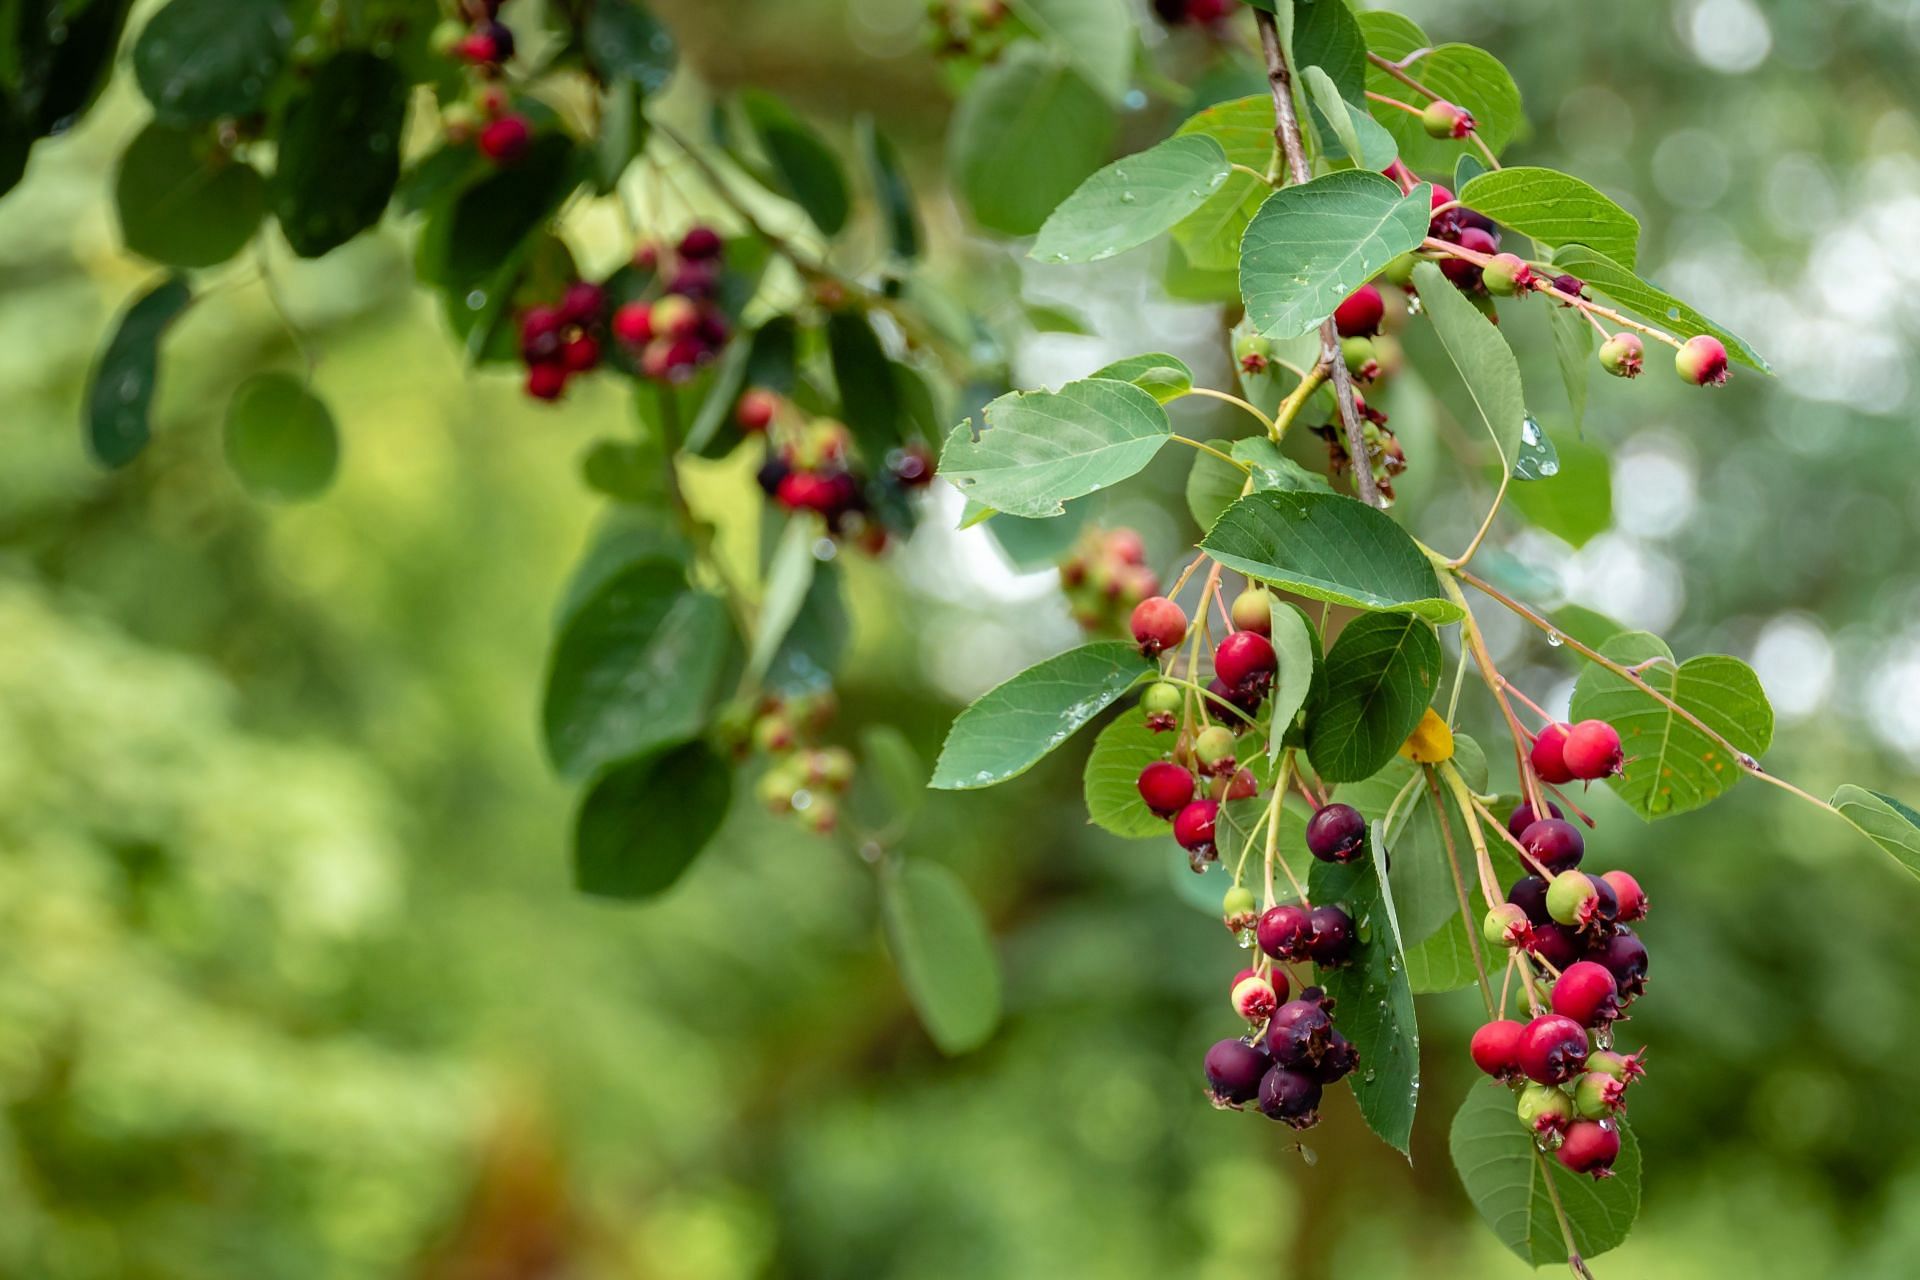 There are several benefits of elderberry. (Image via Unsplash/ Pawel Czerwinski)